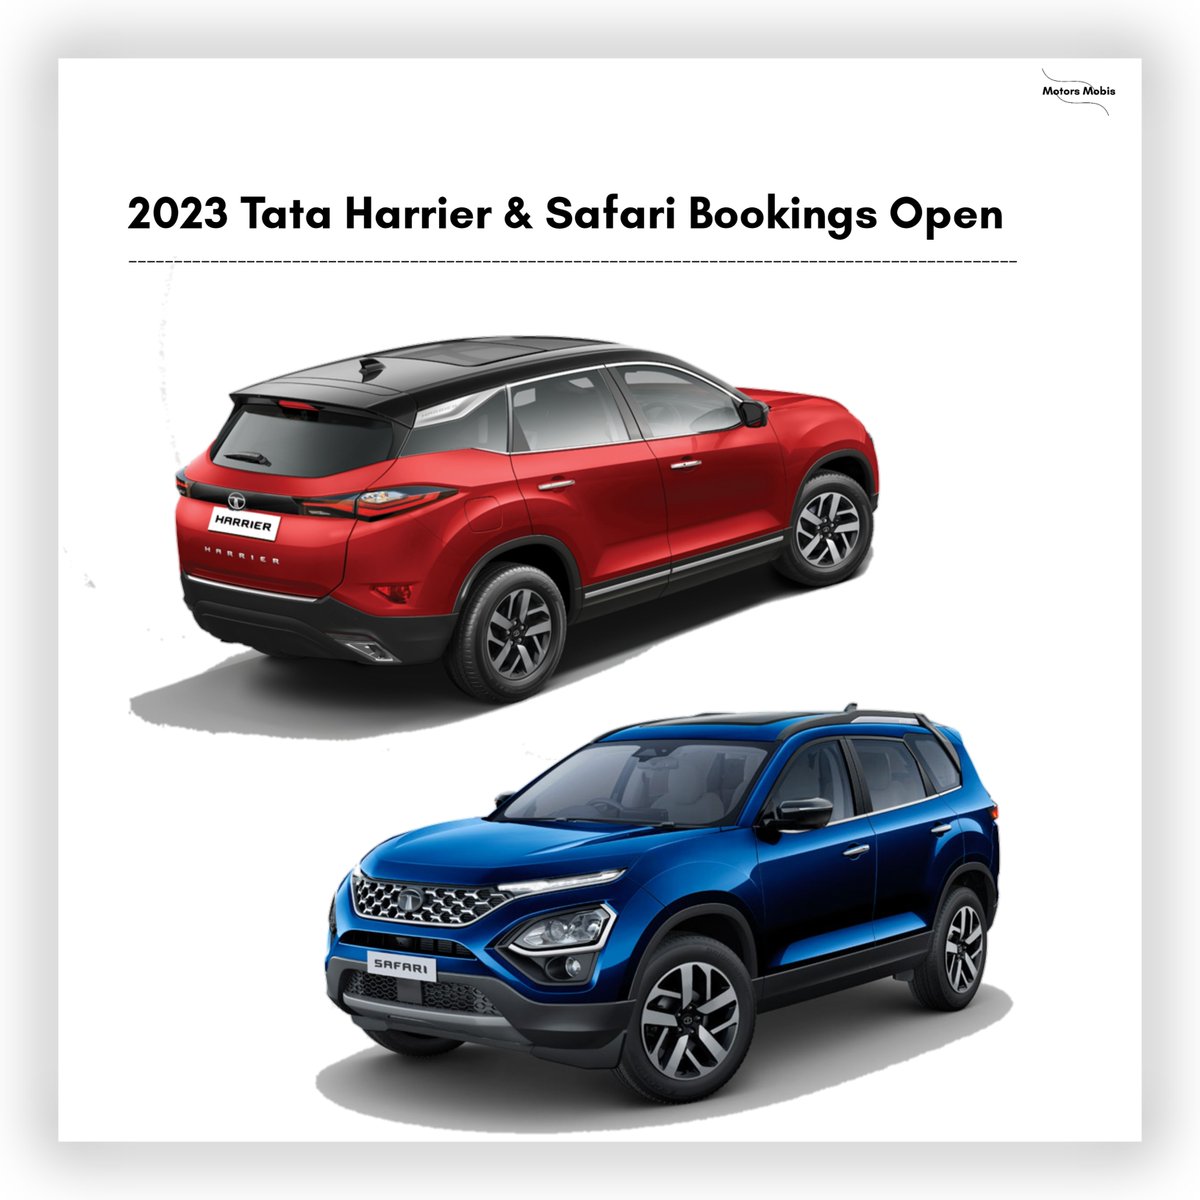 2023 Tata Harrier & Safari Bookings Open | Motors Mobis
.
#TataHarrier #TataSafari #Harrier #Safari #NewHarrier #NewSafari #ADAS #BookingsOpen #CarNews #AutoNews #MotorsMobis